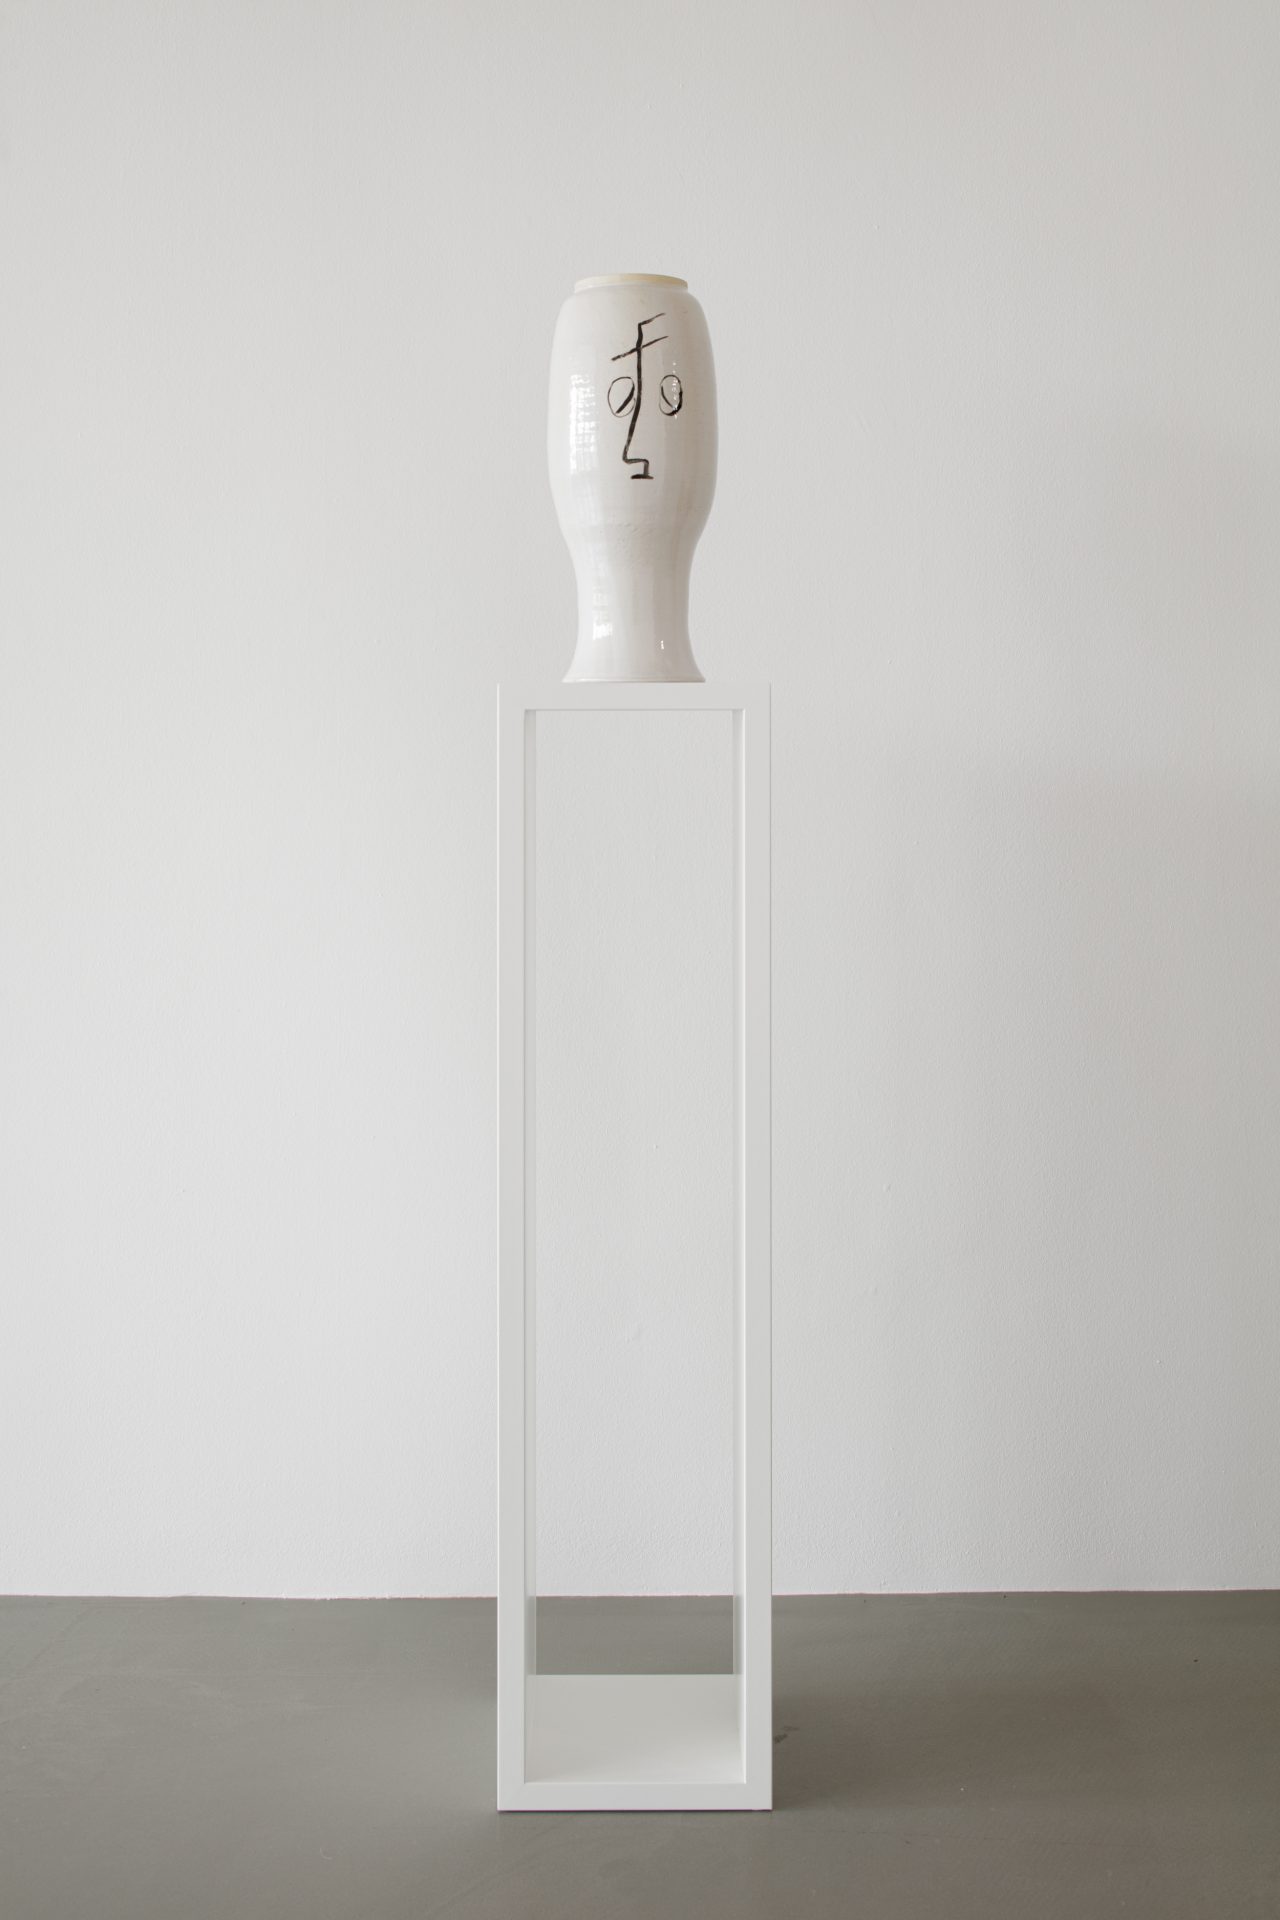 Judith Hopf, Exhausted vase (2020)